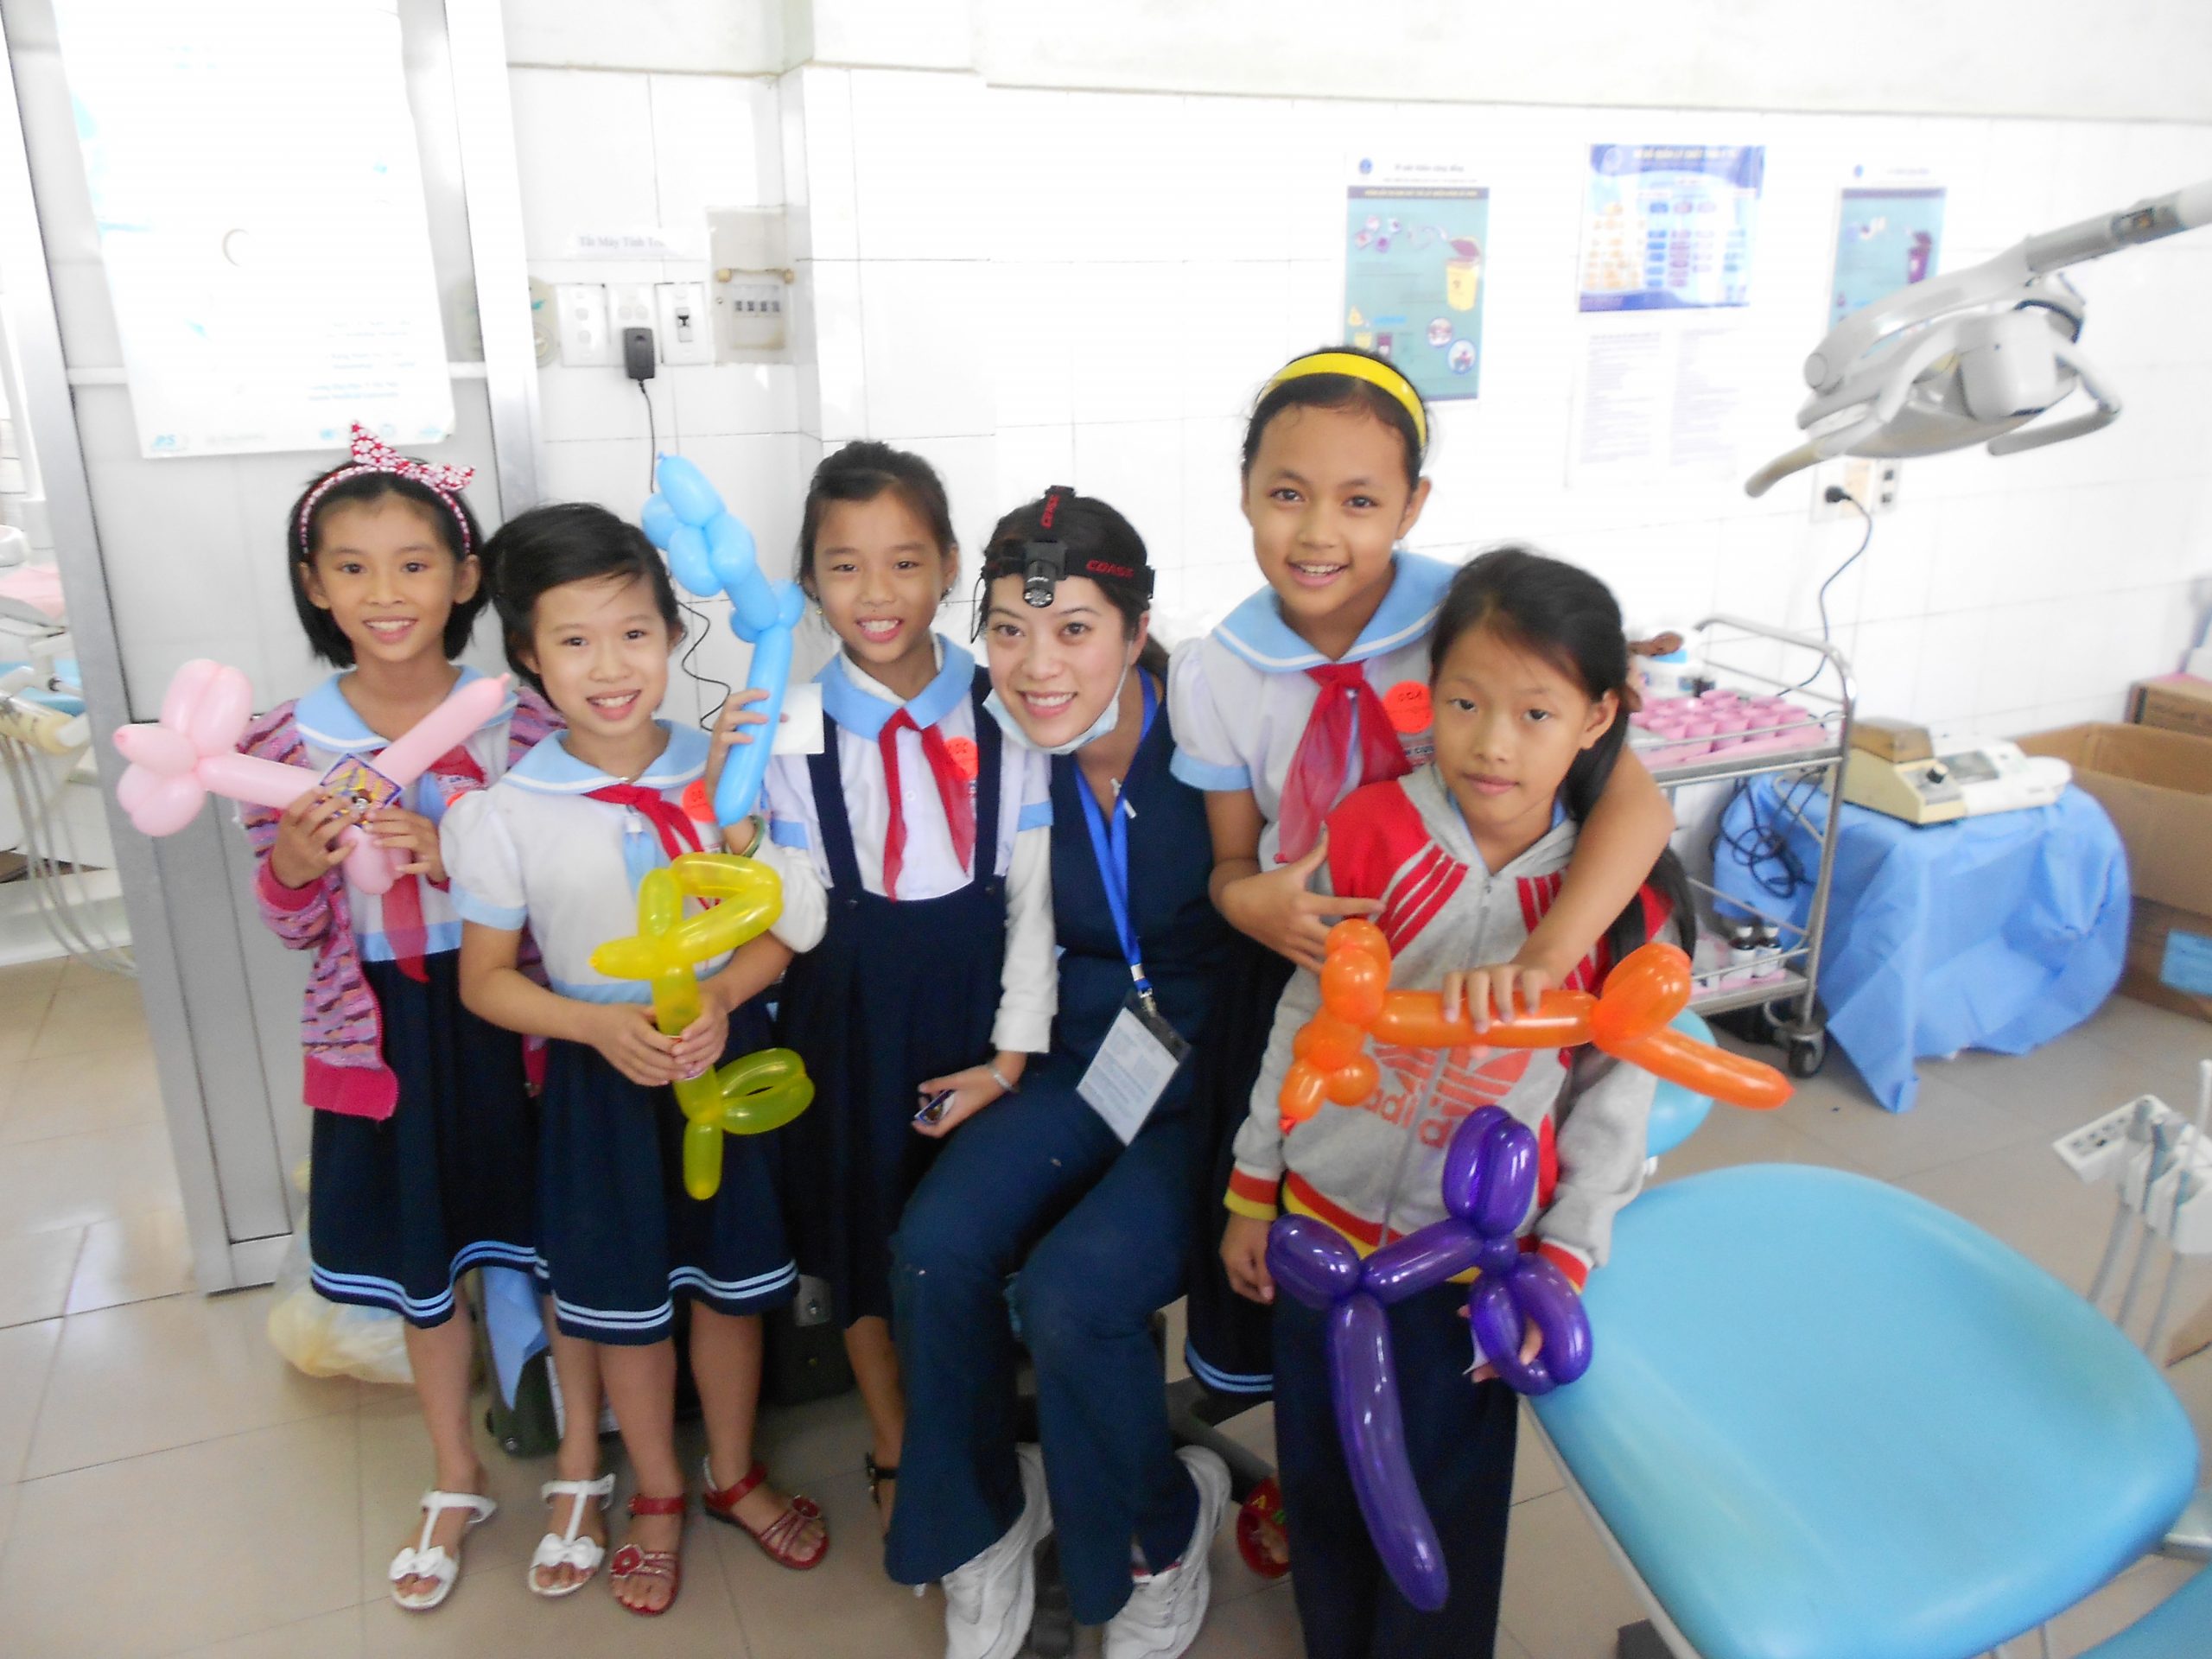 Dr. Duong and Vietnamese children